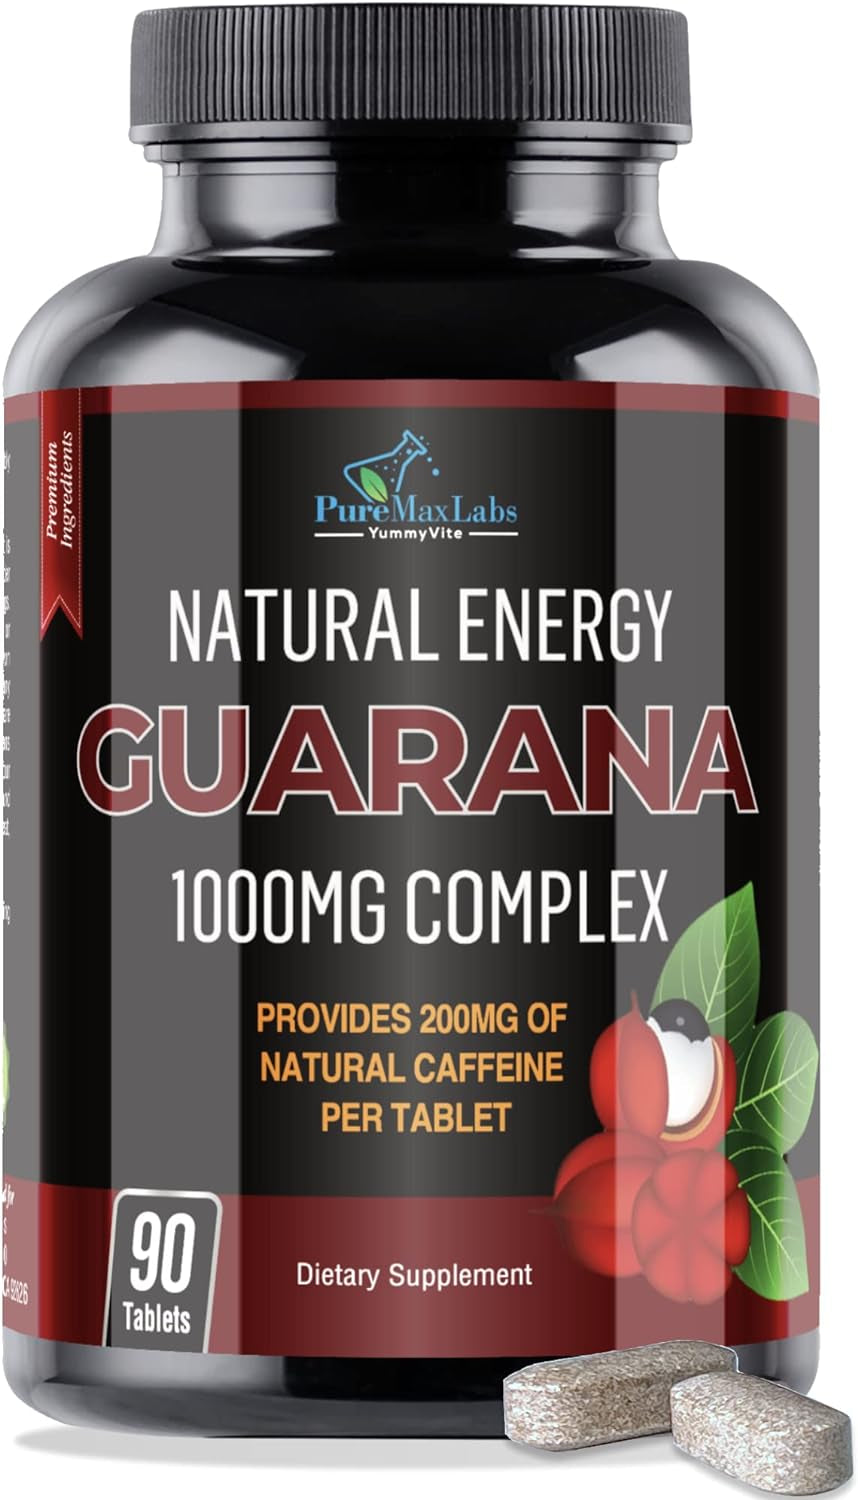 Natural Energy Guarana 1000MG - Provides 200MG of Herbal Caffeine (2 Cups Coffee), Antioxidants, Boost Mental Focus, Natural Caffeine Tablets, 90 Tablets